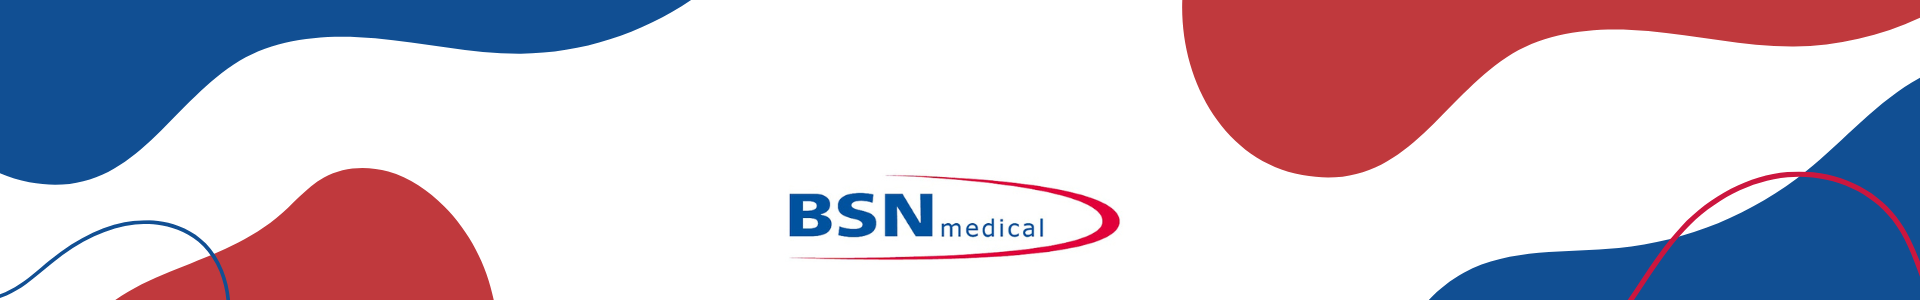 Marca BSN Medical